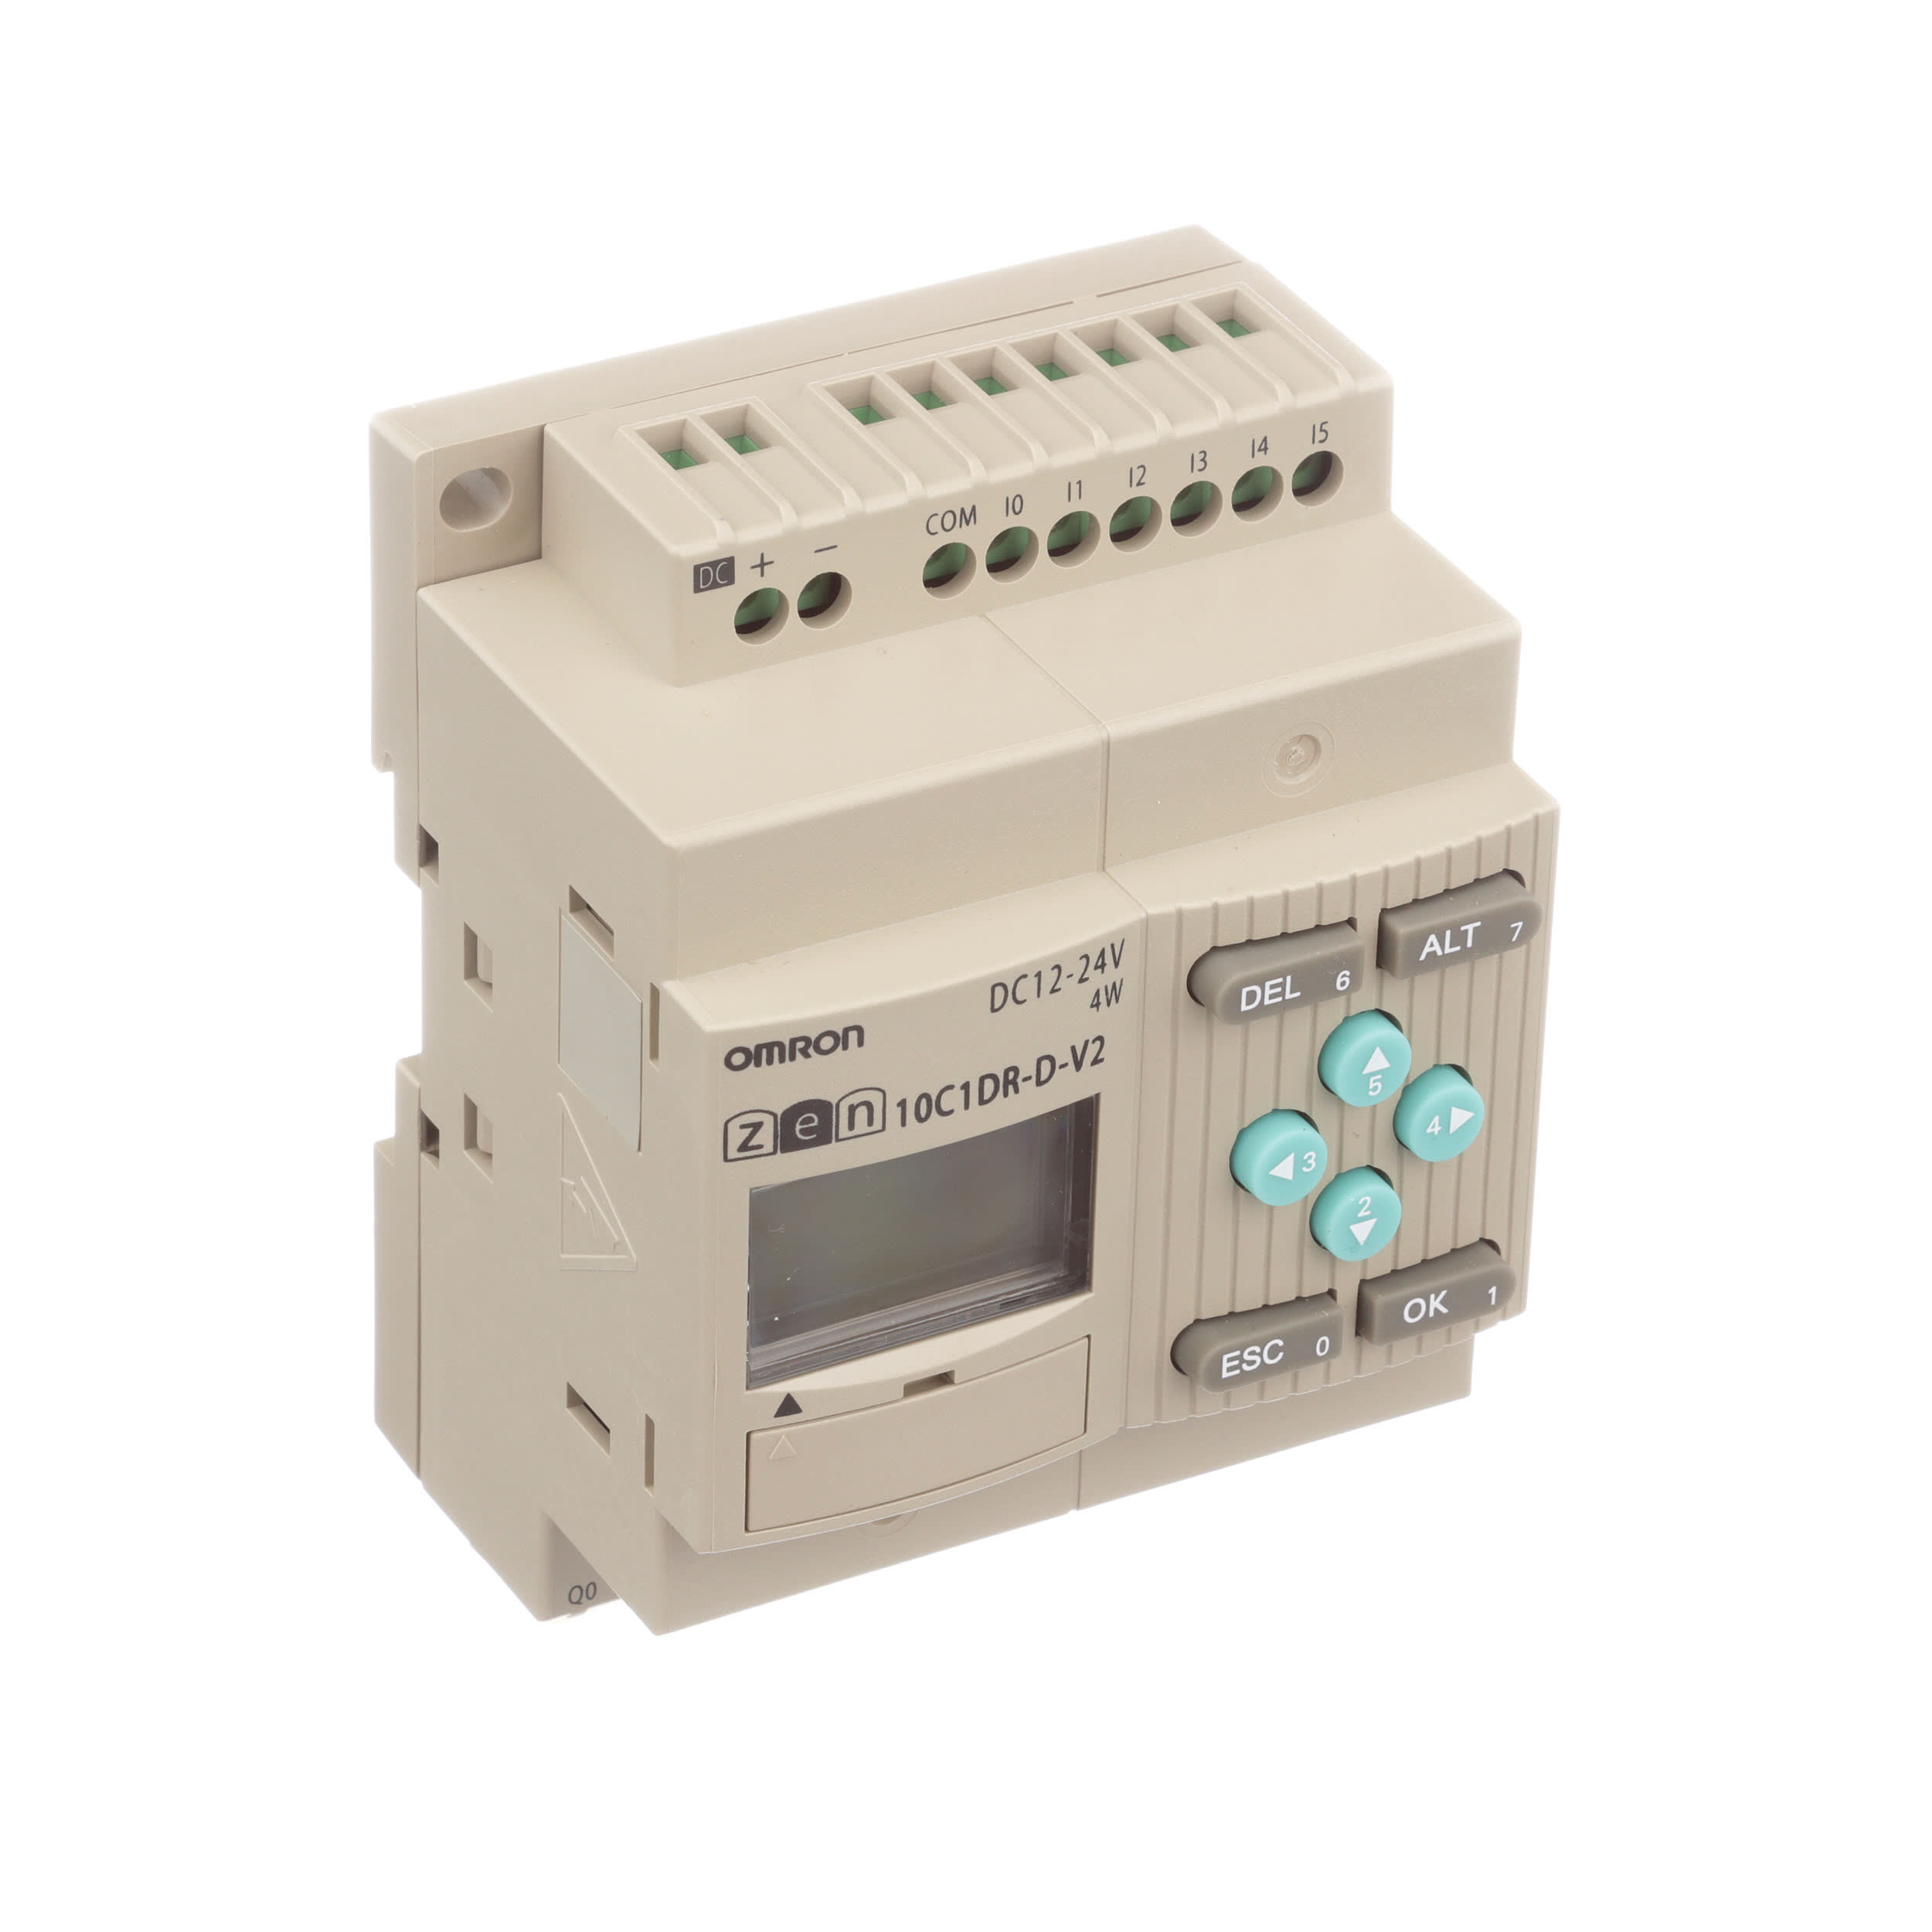 1PC for Omron ZEN-10C1DR-D-V2 12-24VDC Programmable Relay Brand NEW IN BOX Z87 